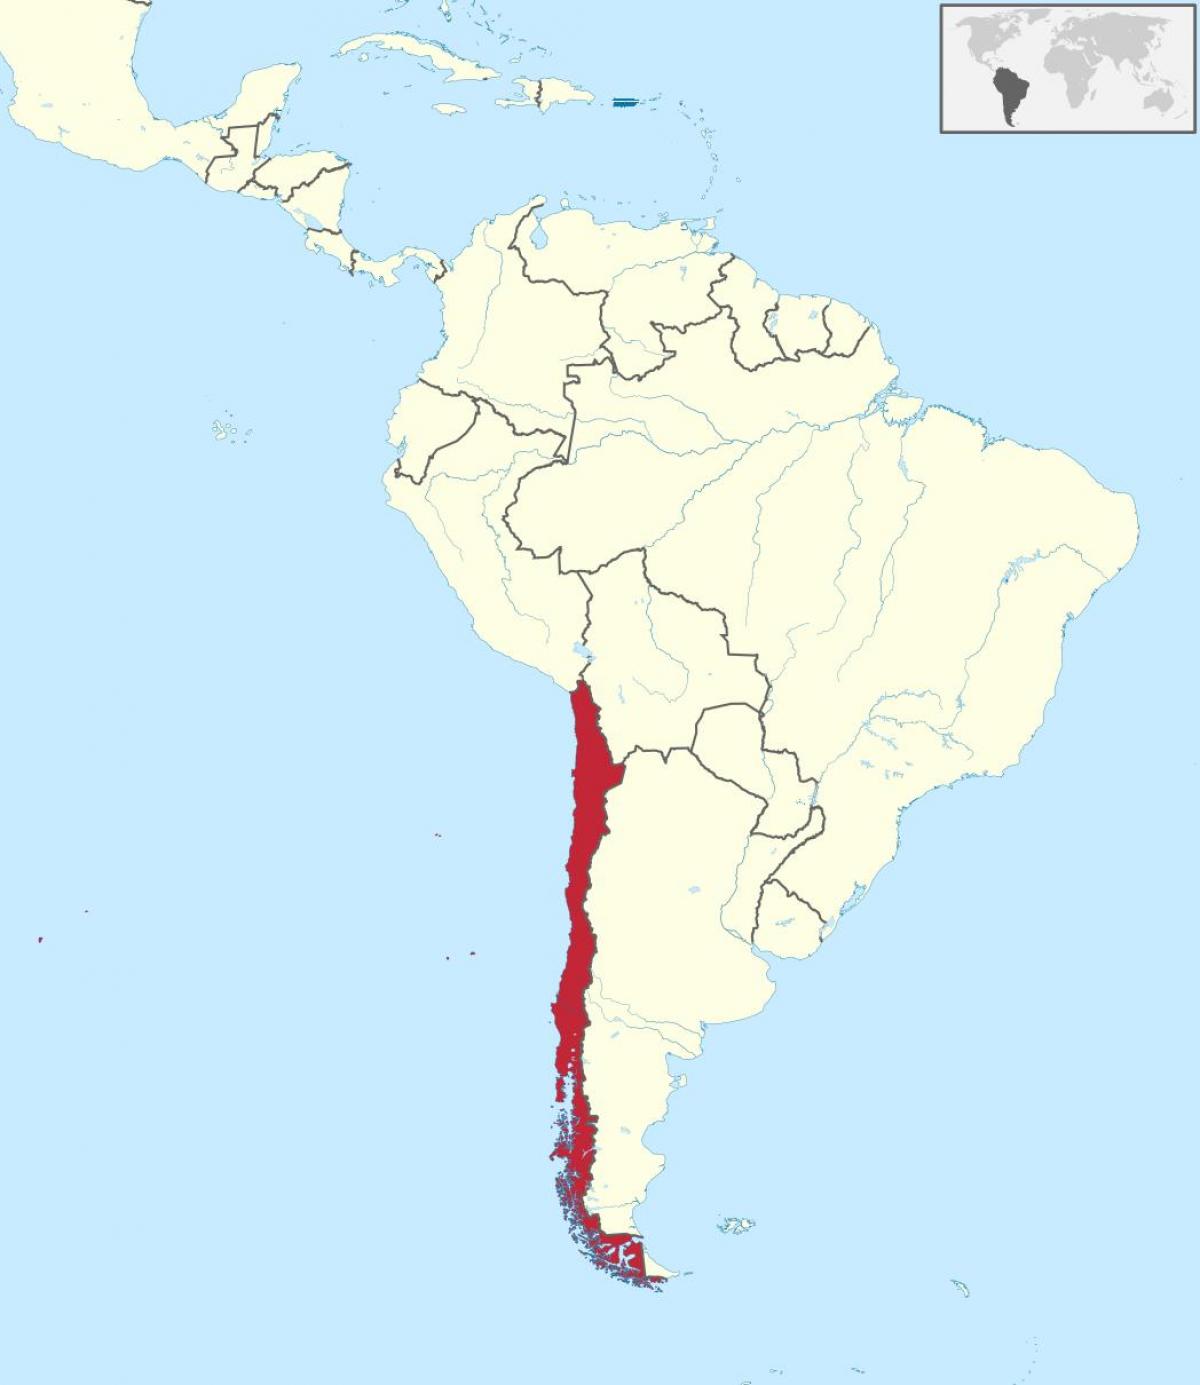 Chile na américa do sul mapa